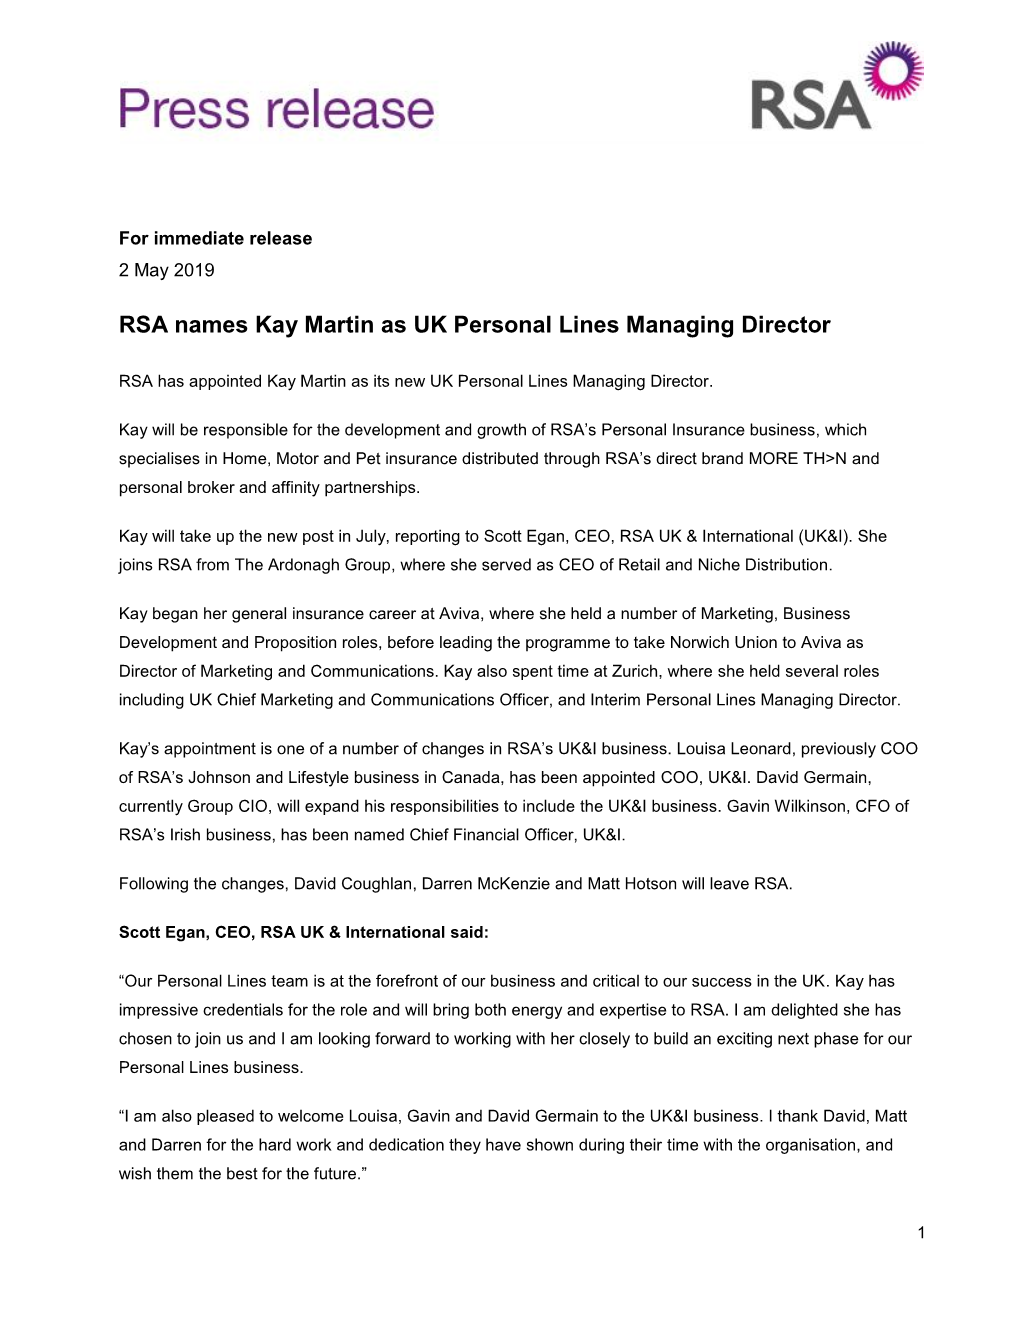 RSA Names Kay Martin As UK Personal Lines Managing Director